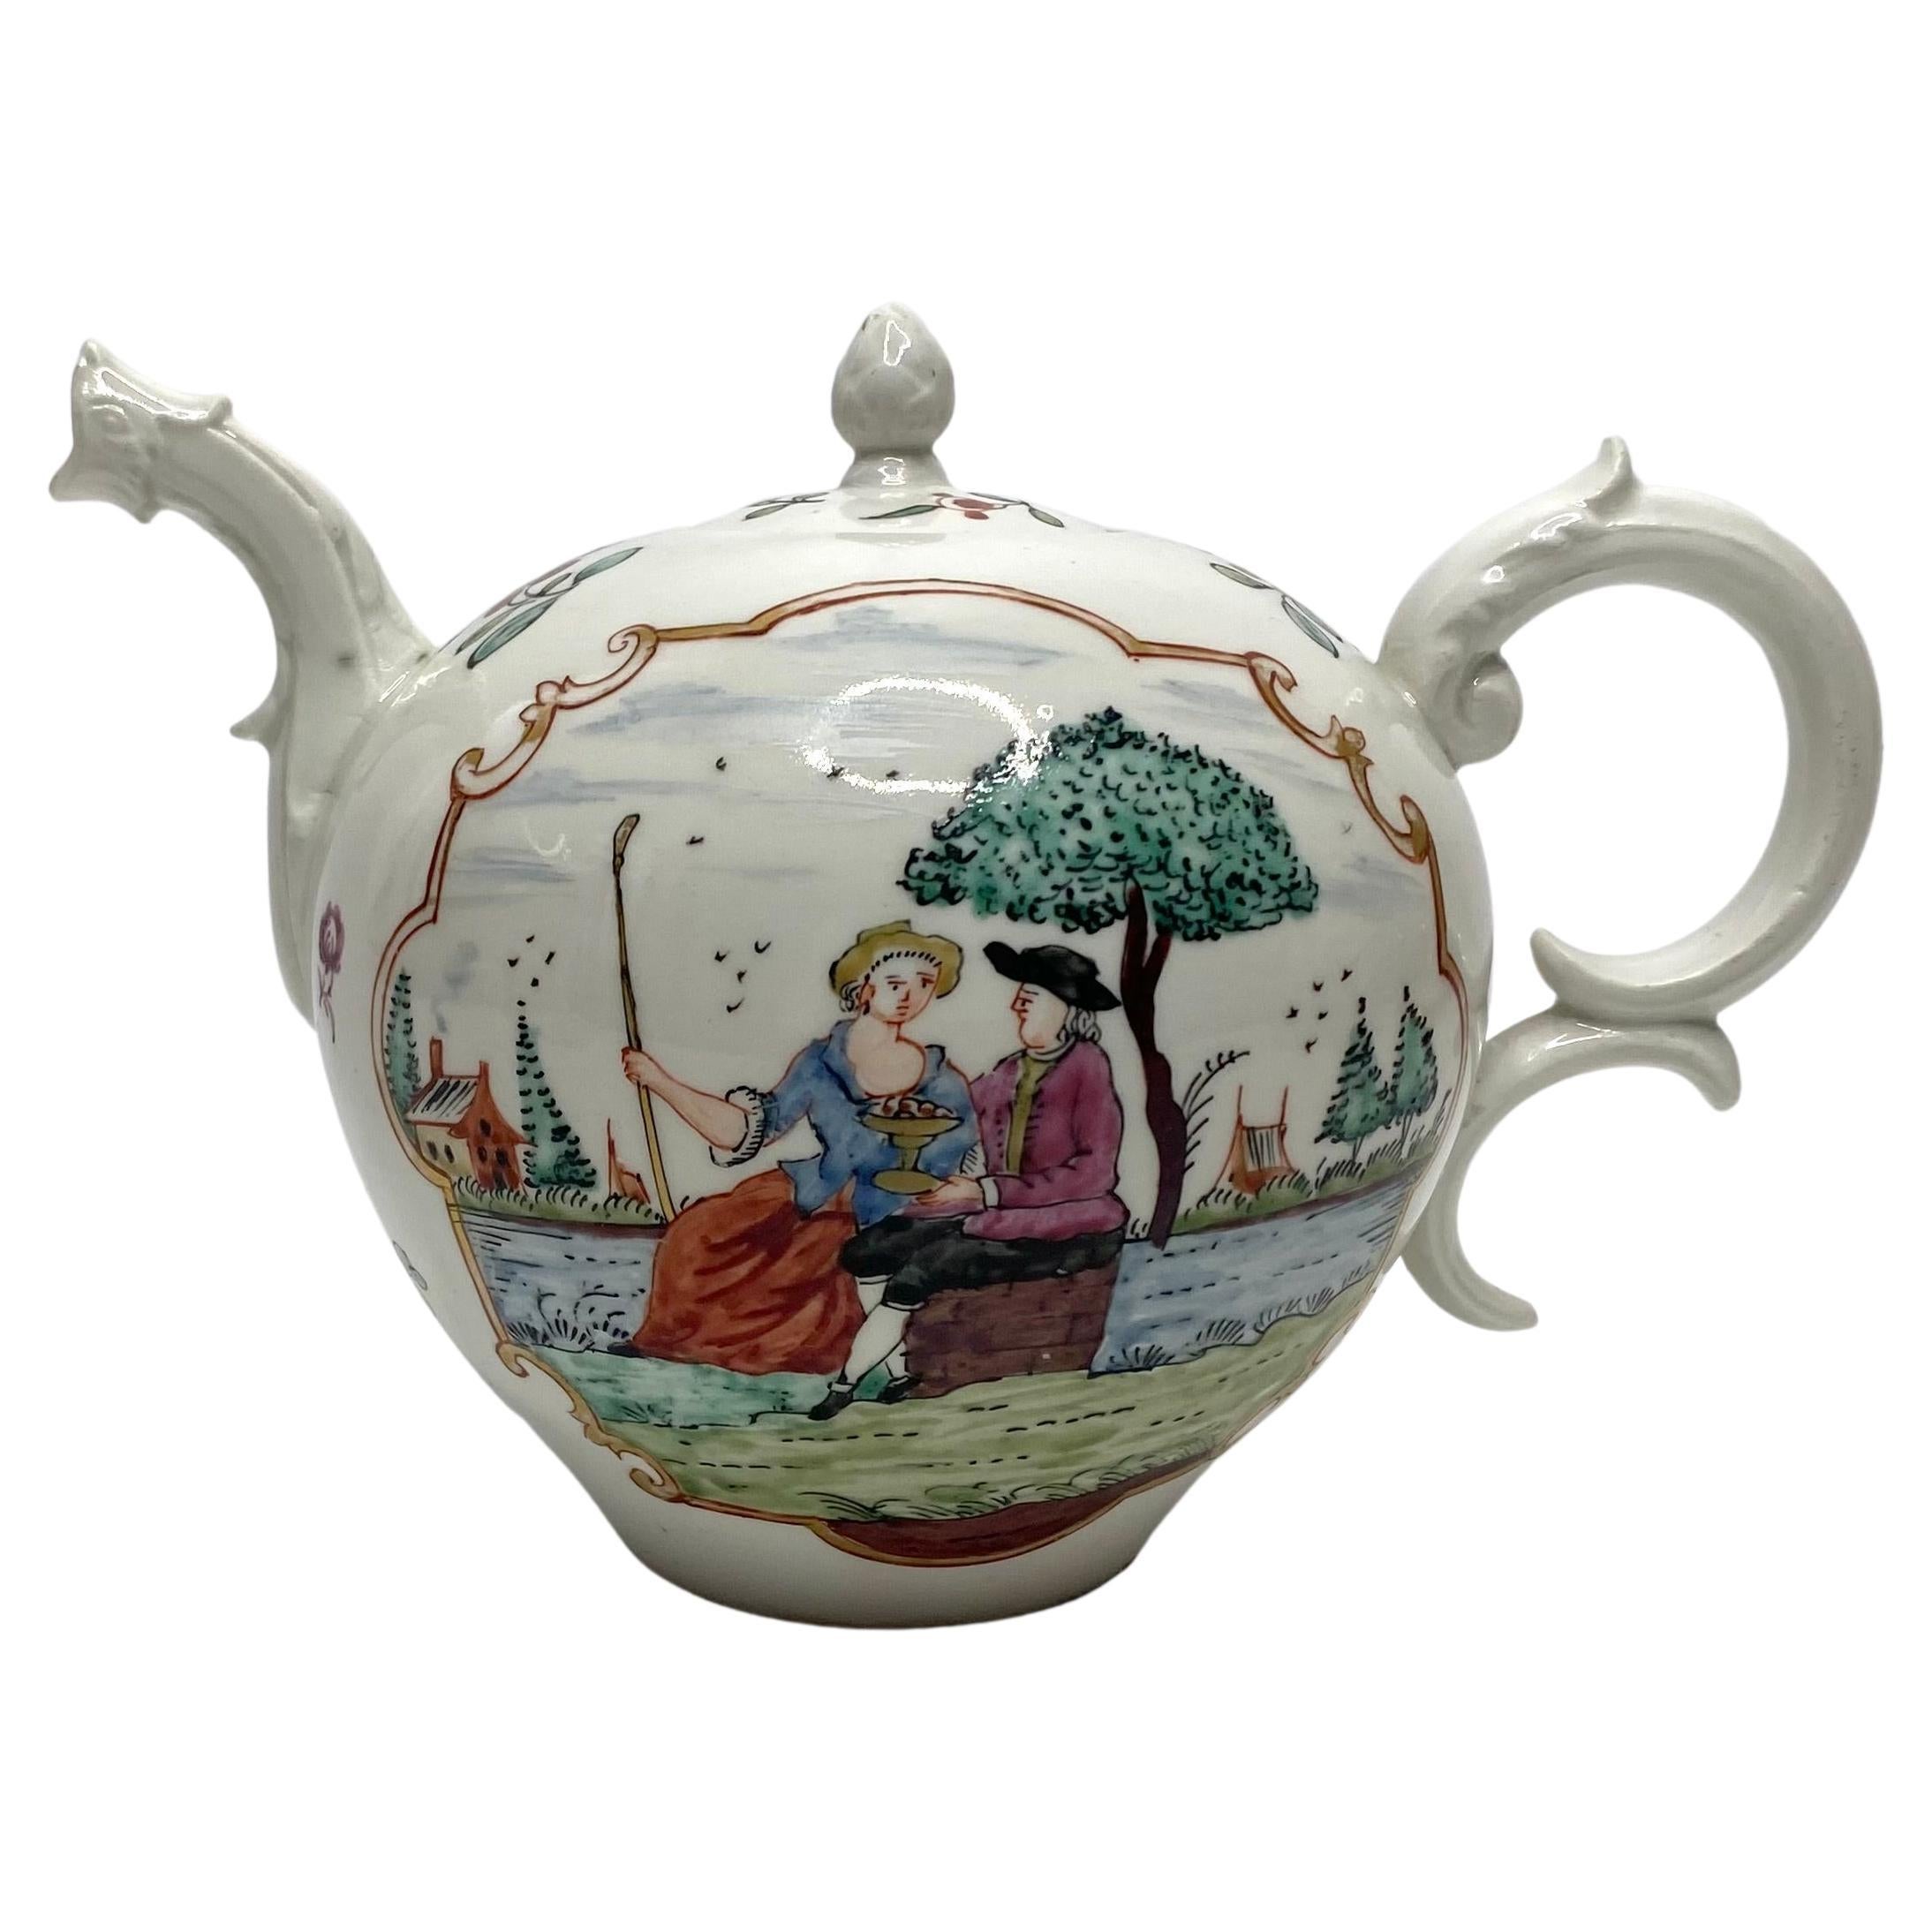 Hochst porcelain teapot & cover, c. 1755.